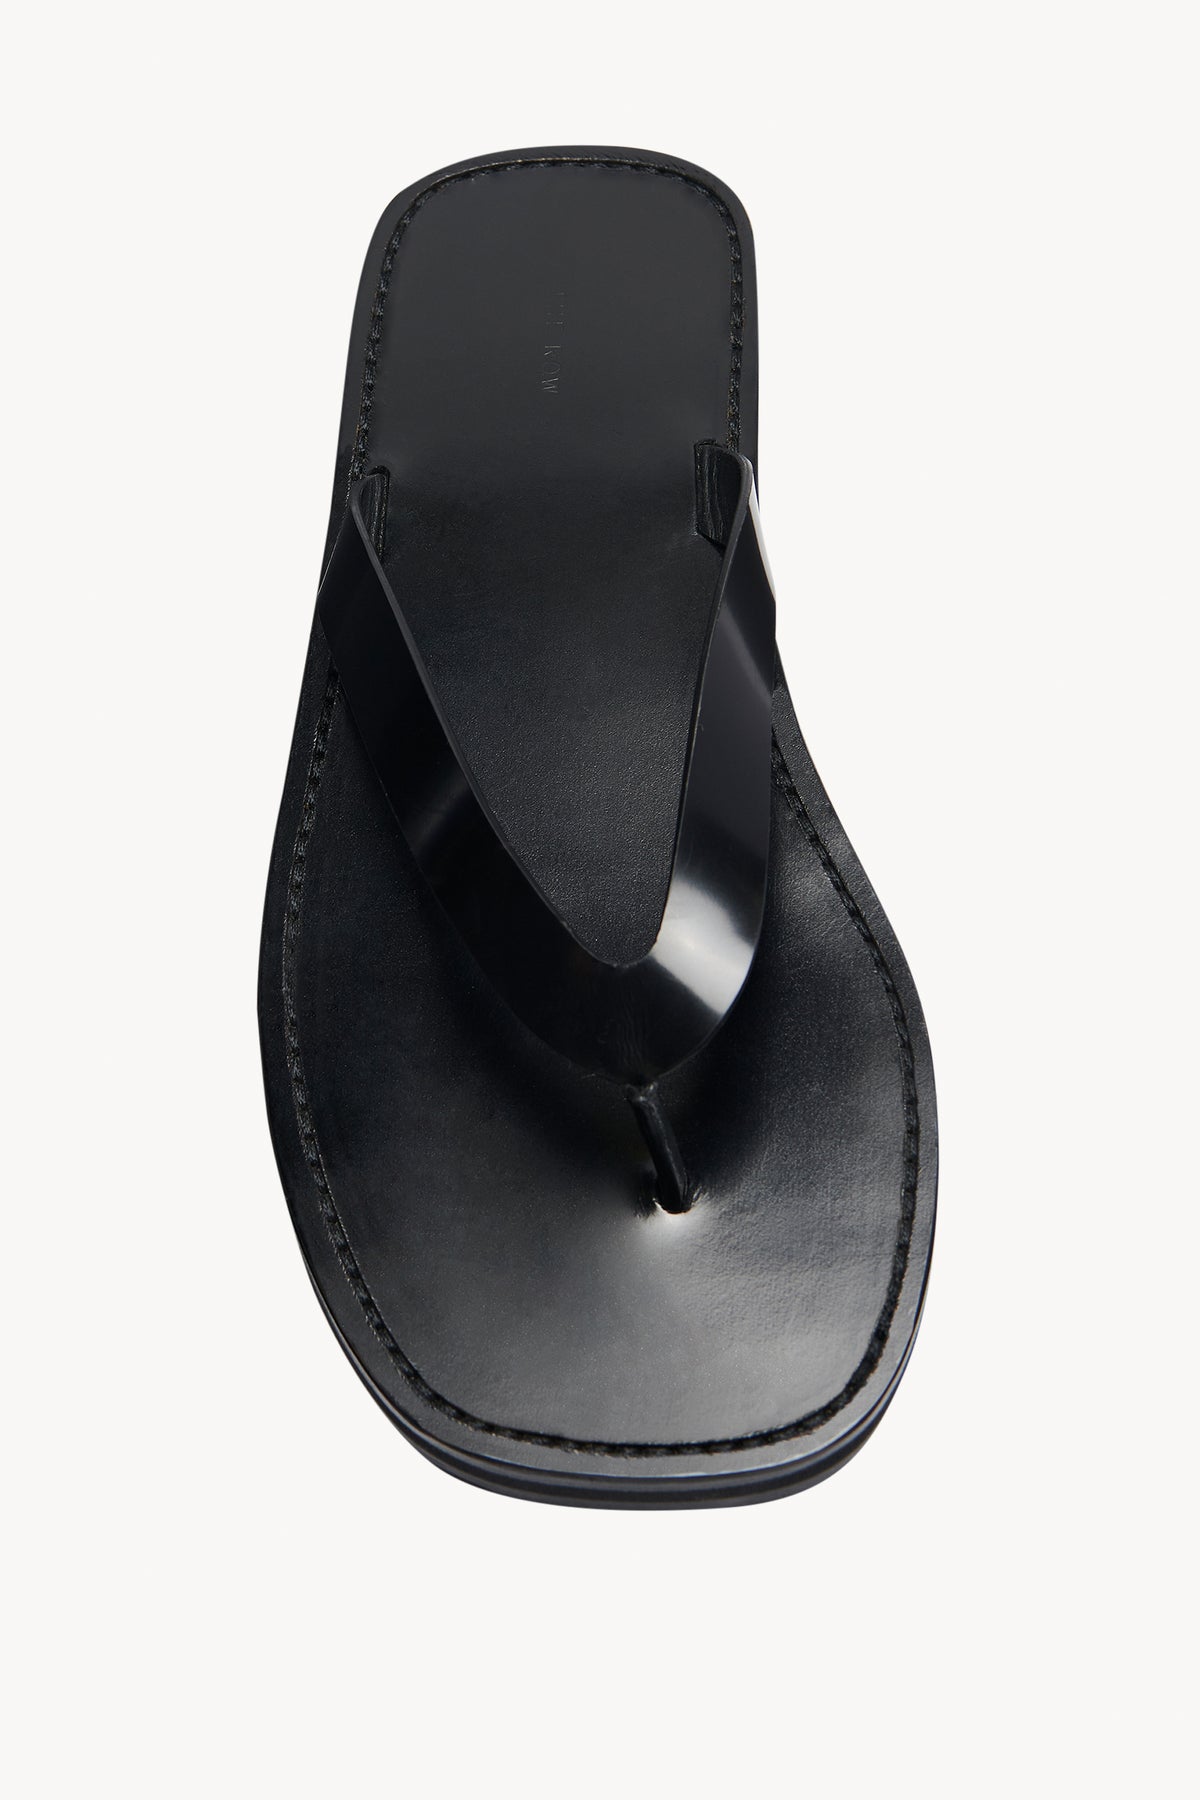 Hot Flip - Flip flops - Calf leather and fabric - Black